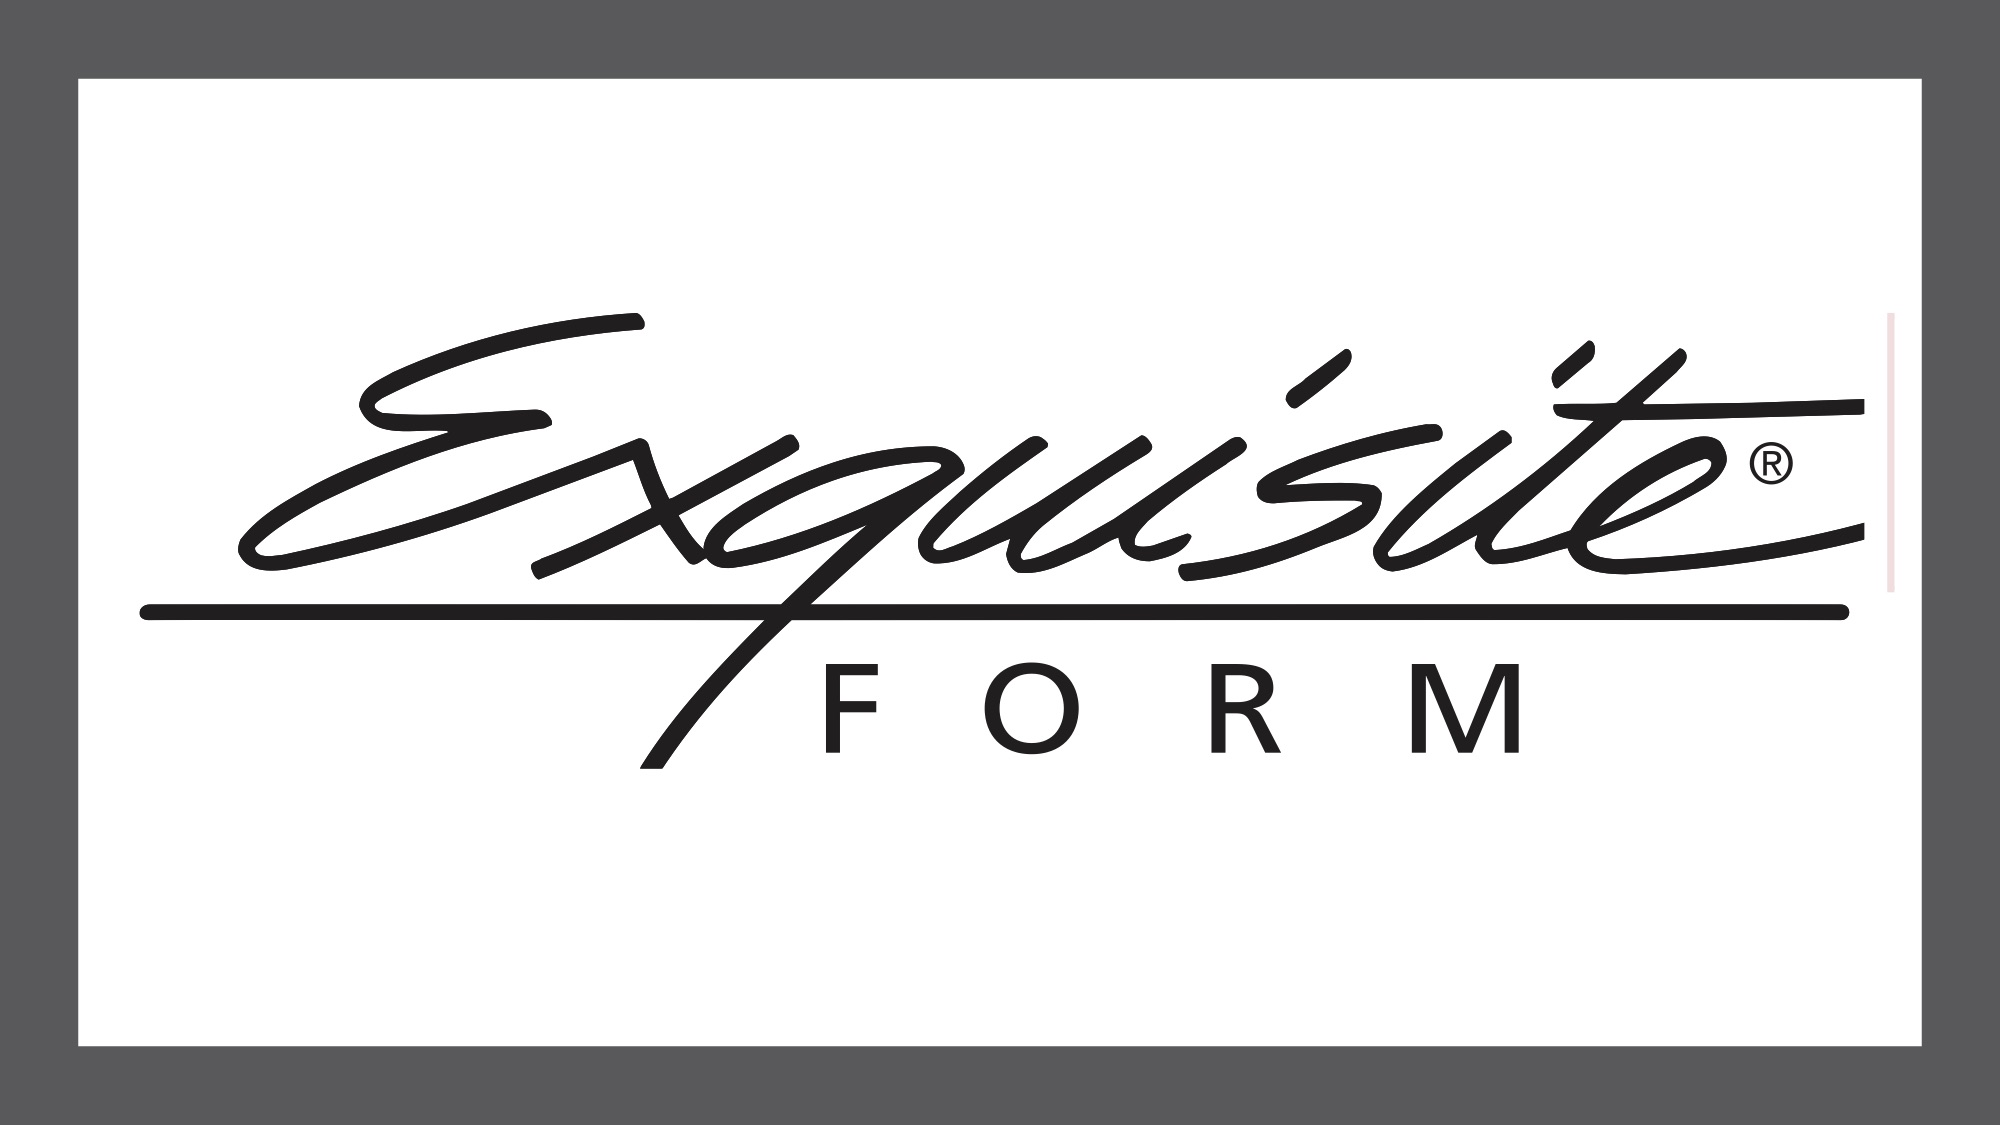 Exquisite Form (Best Form) logo